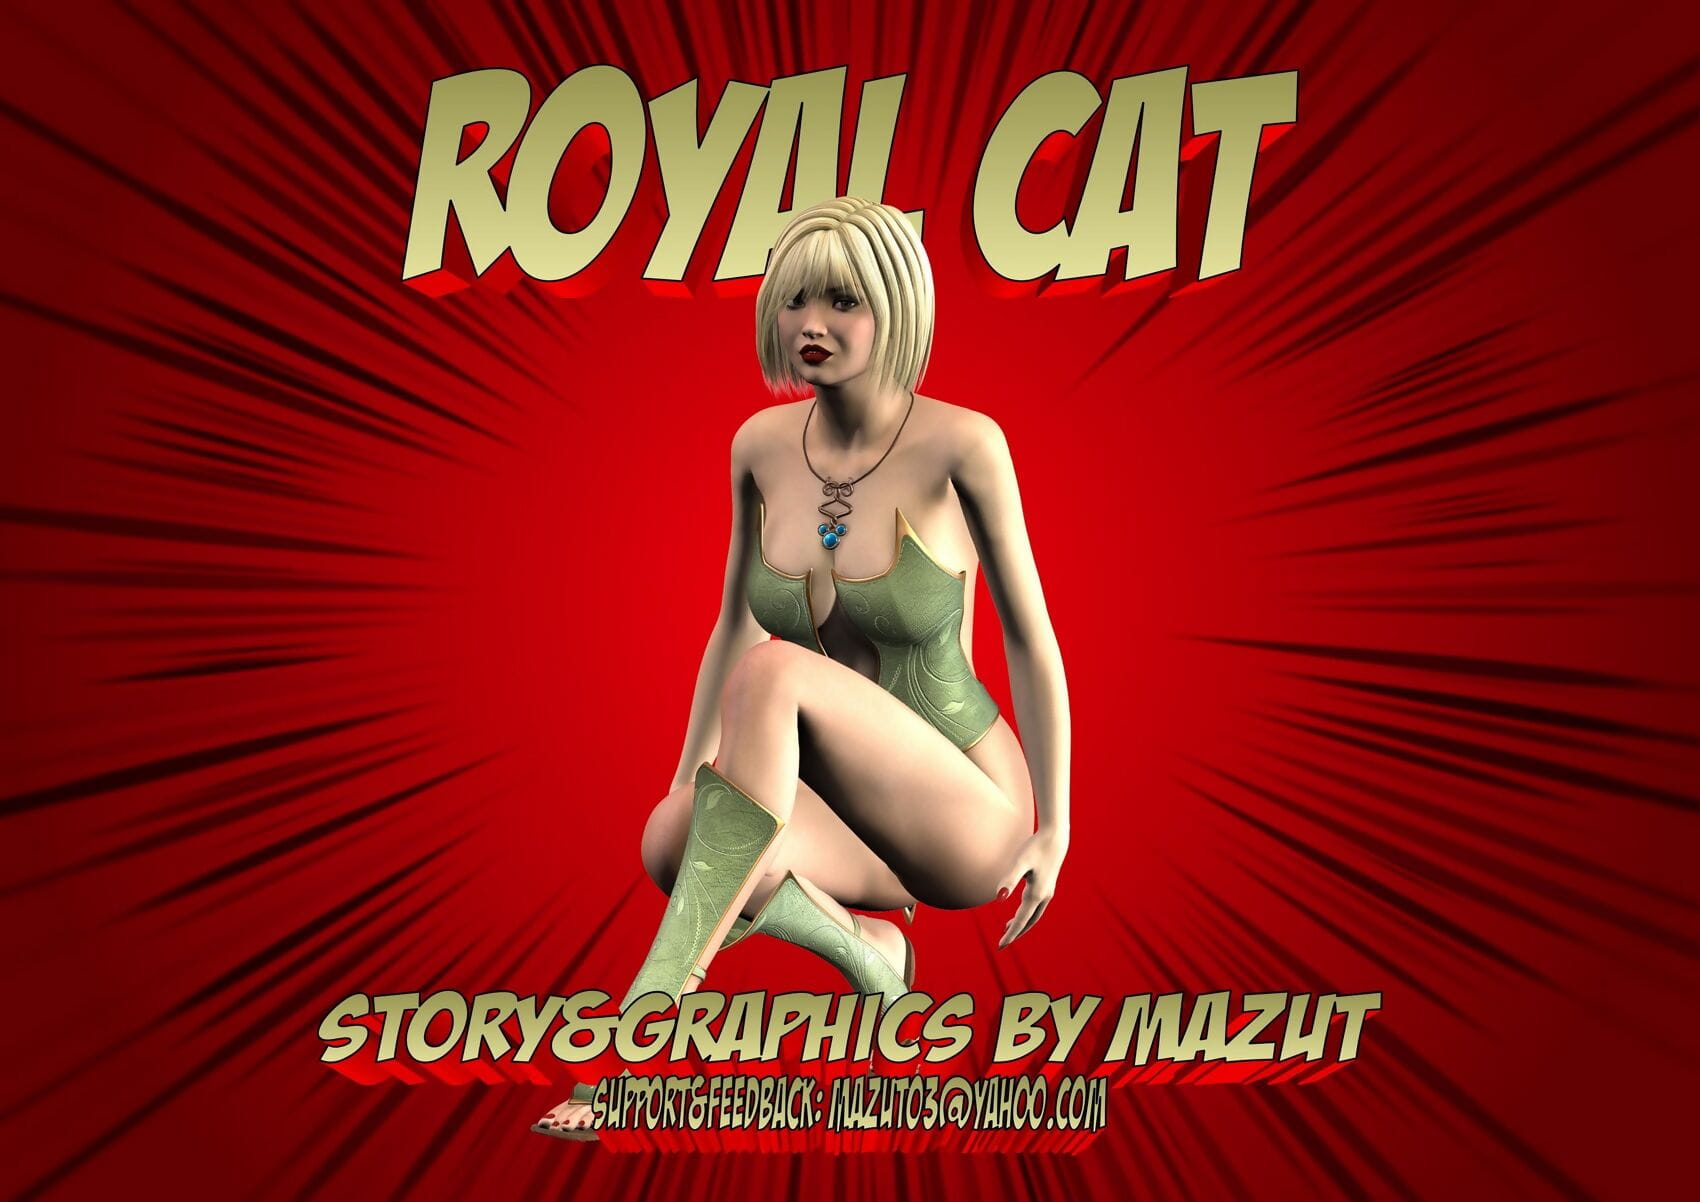 mazut – ロイヤル 猫 page 1